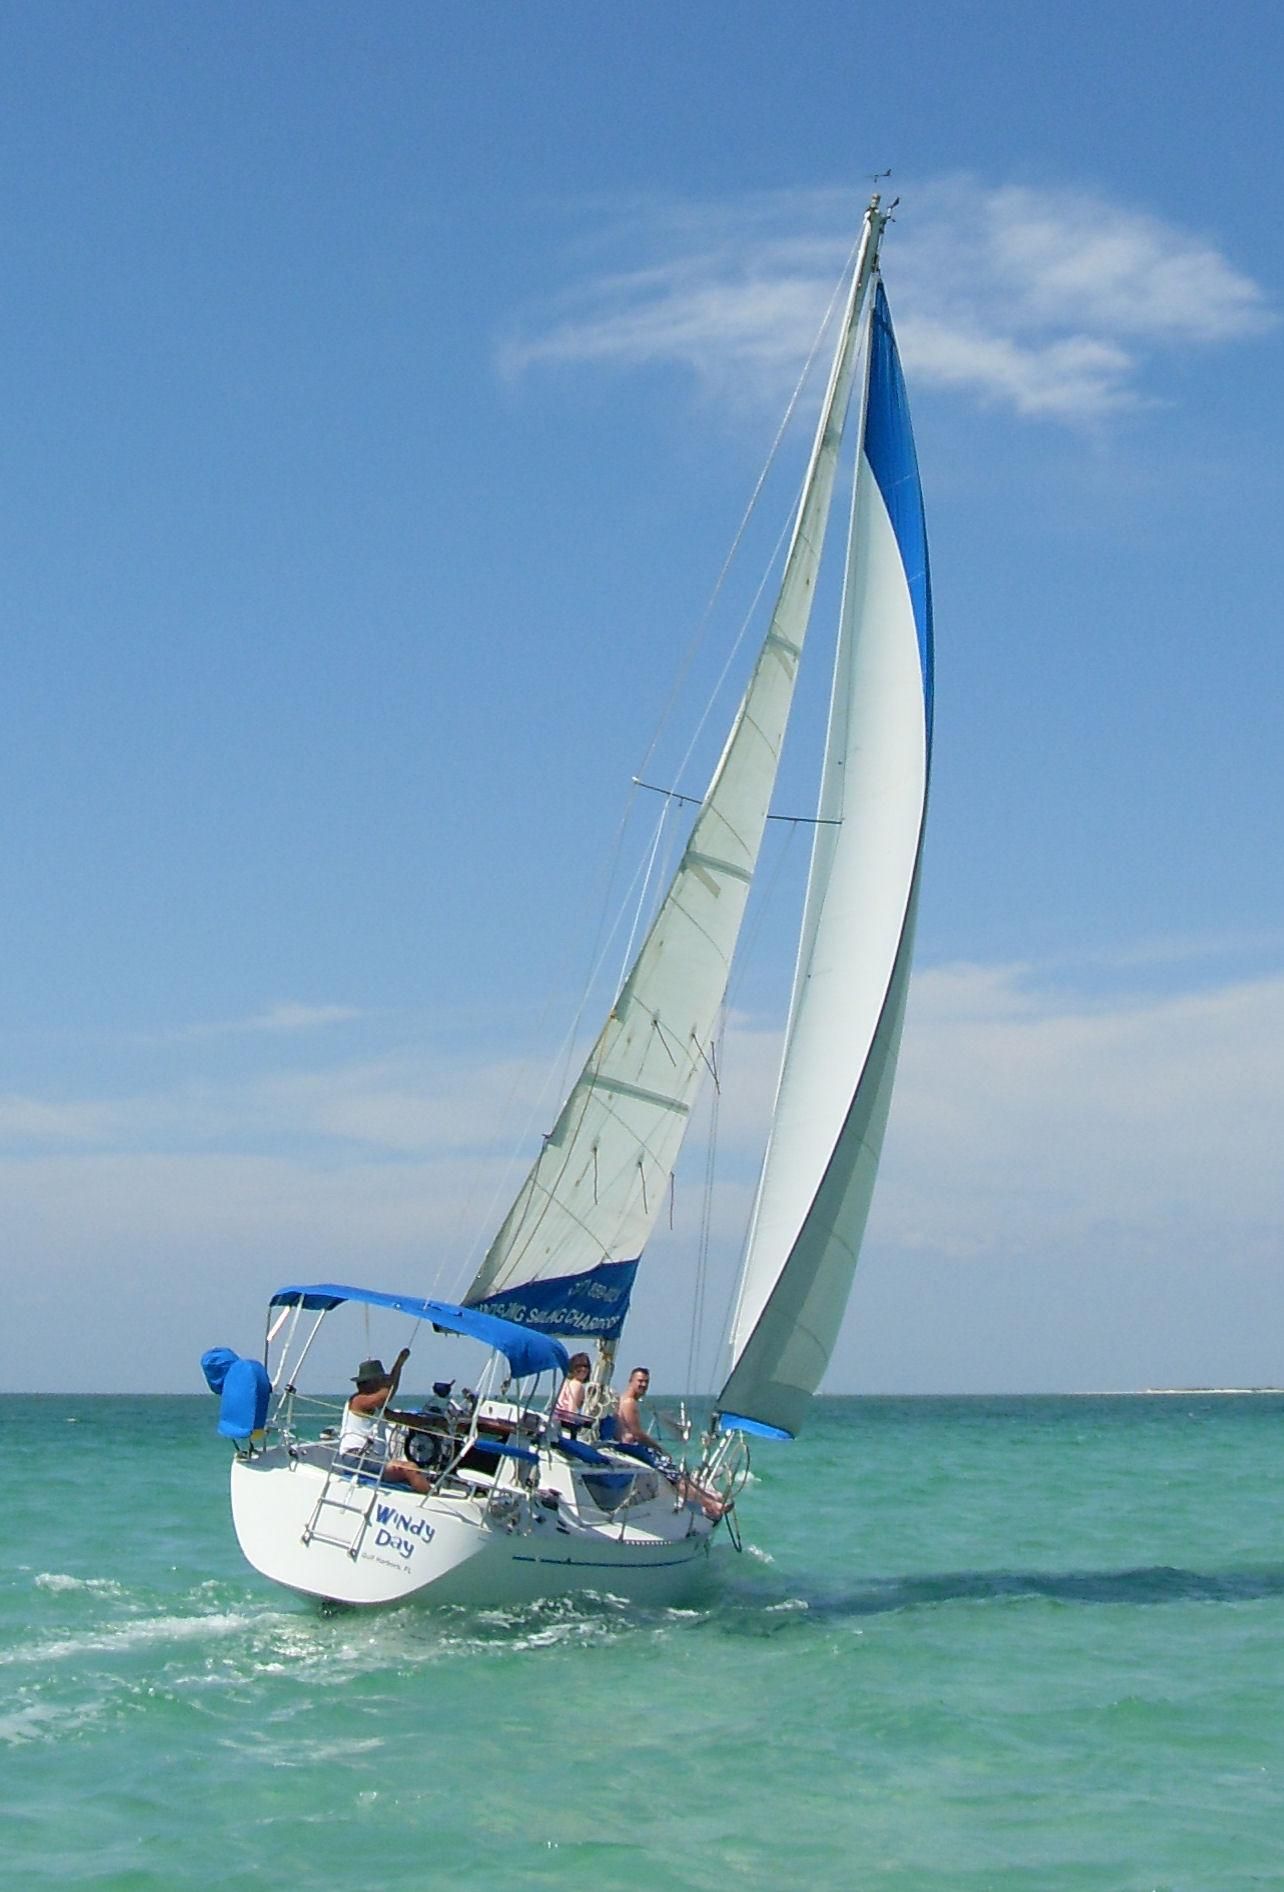 kirie elite sailboat for sale